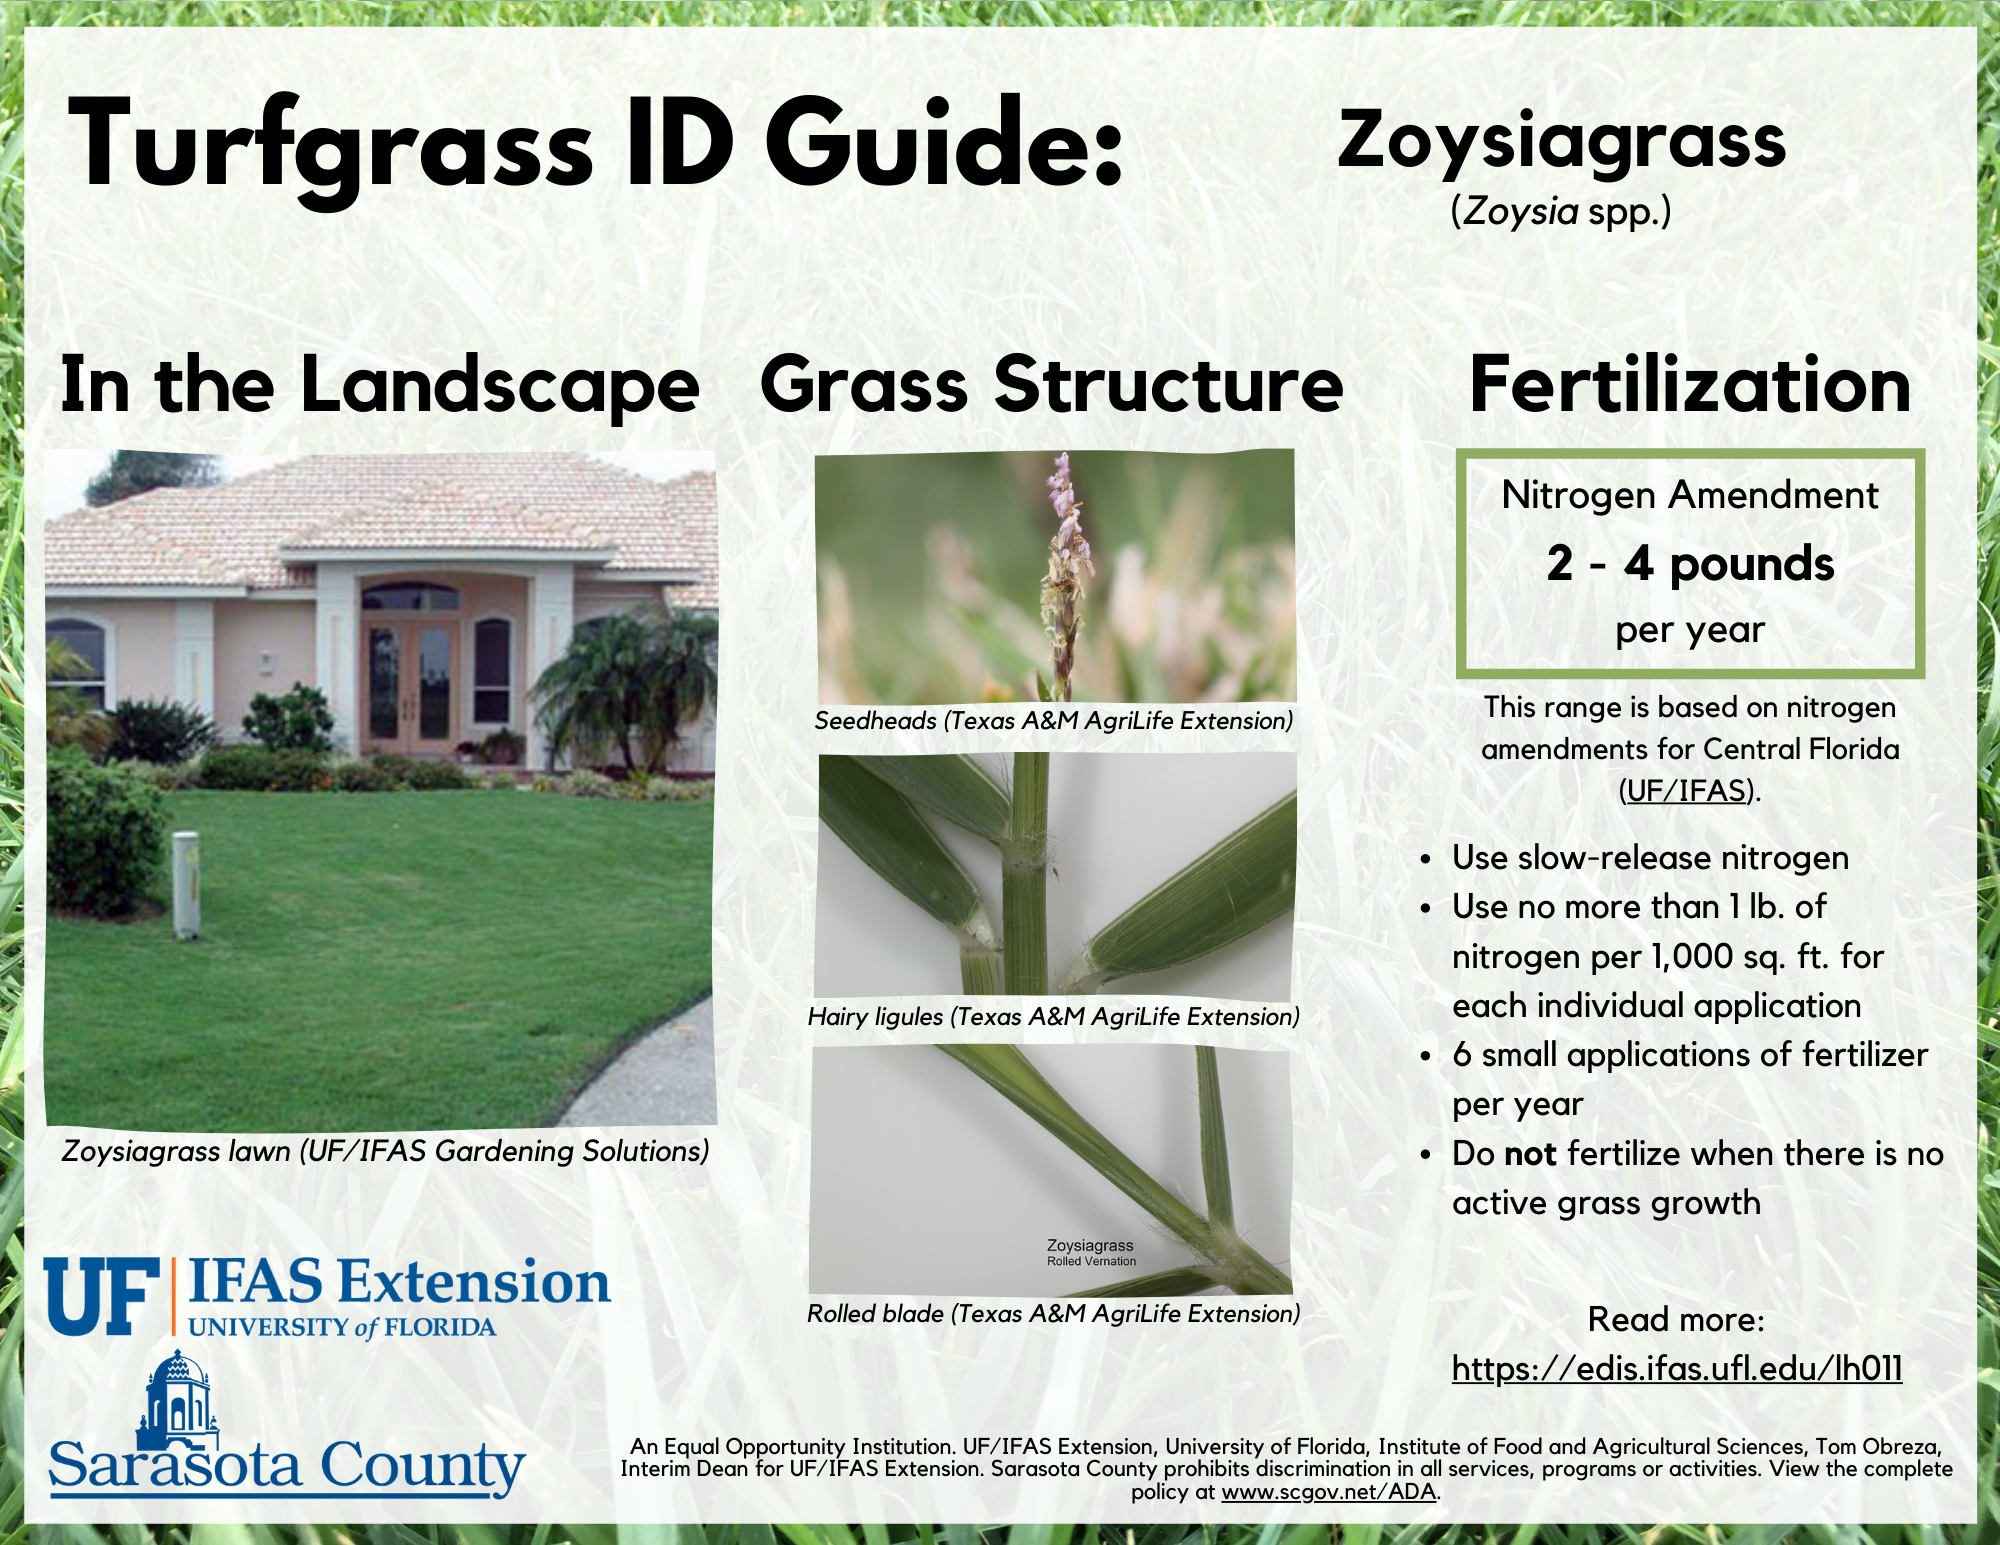 Guide to fertilizing Zoysiagrass in Sarasota County